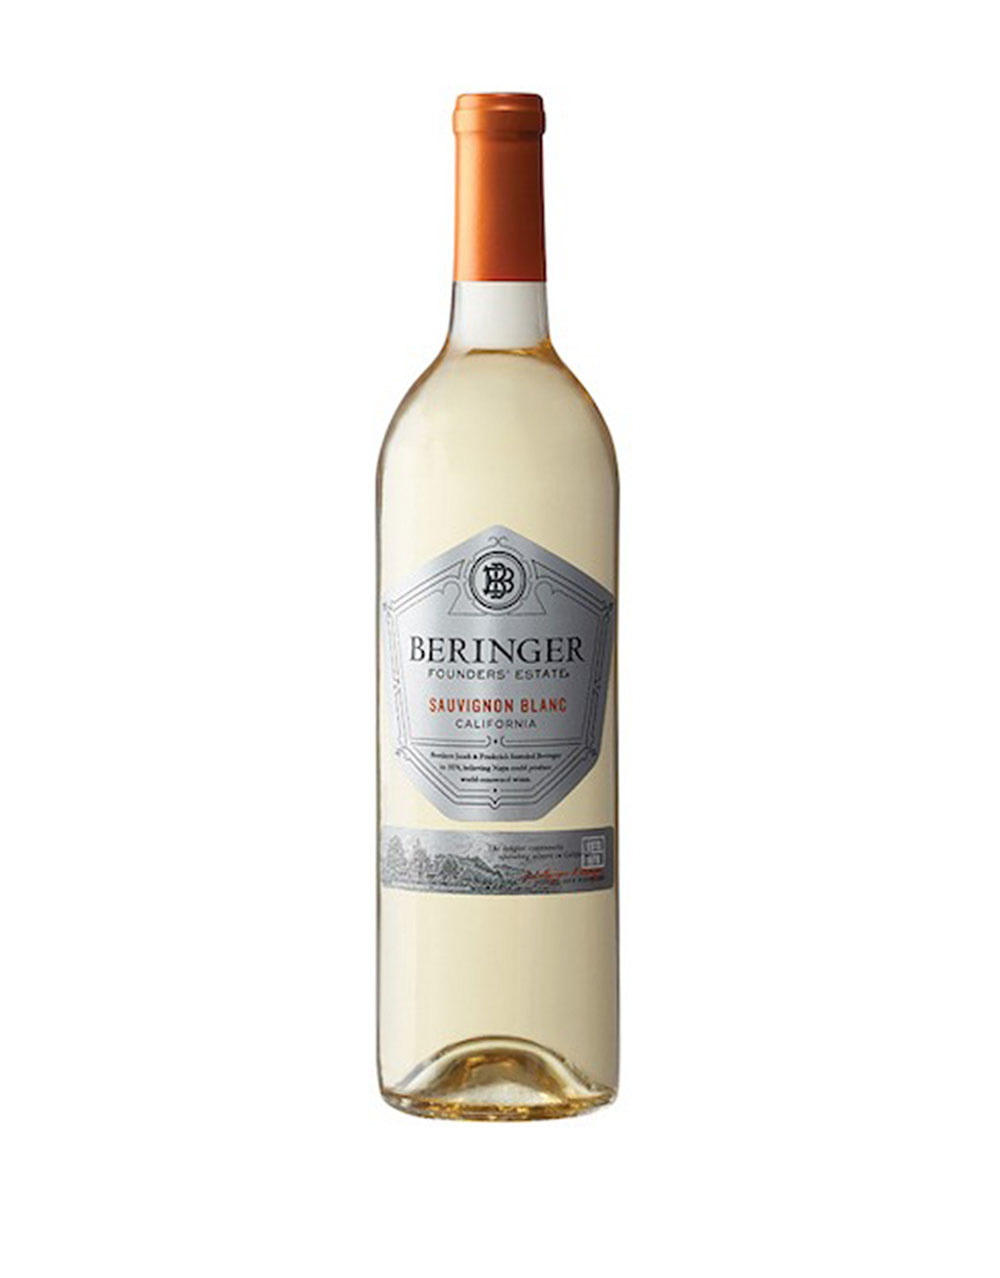 Beringer Founders' Estate Sauvignon Blanc 2018 California